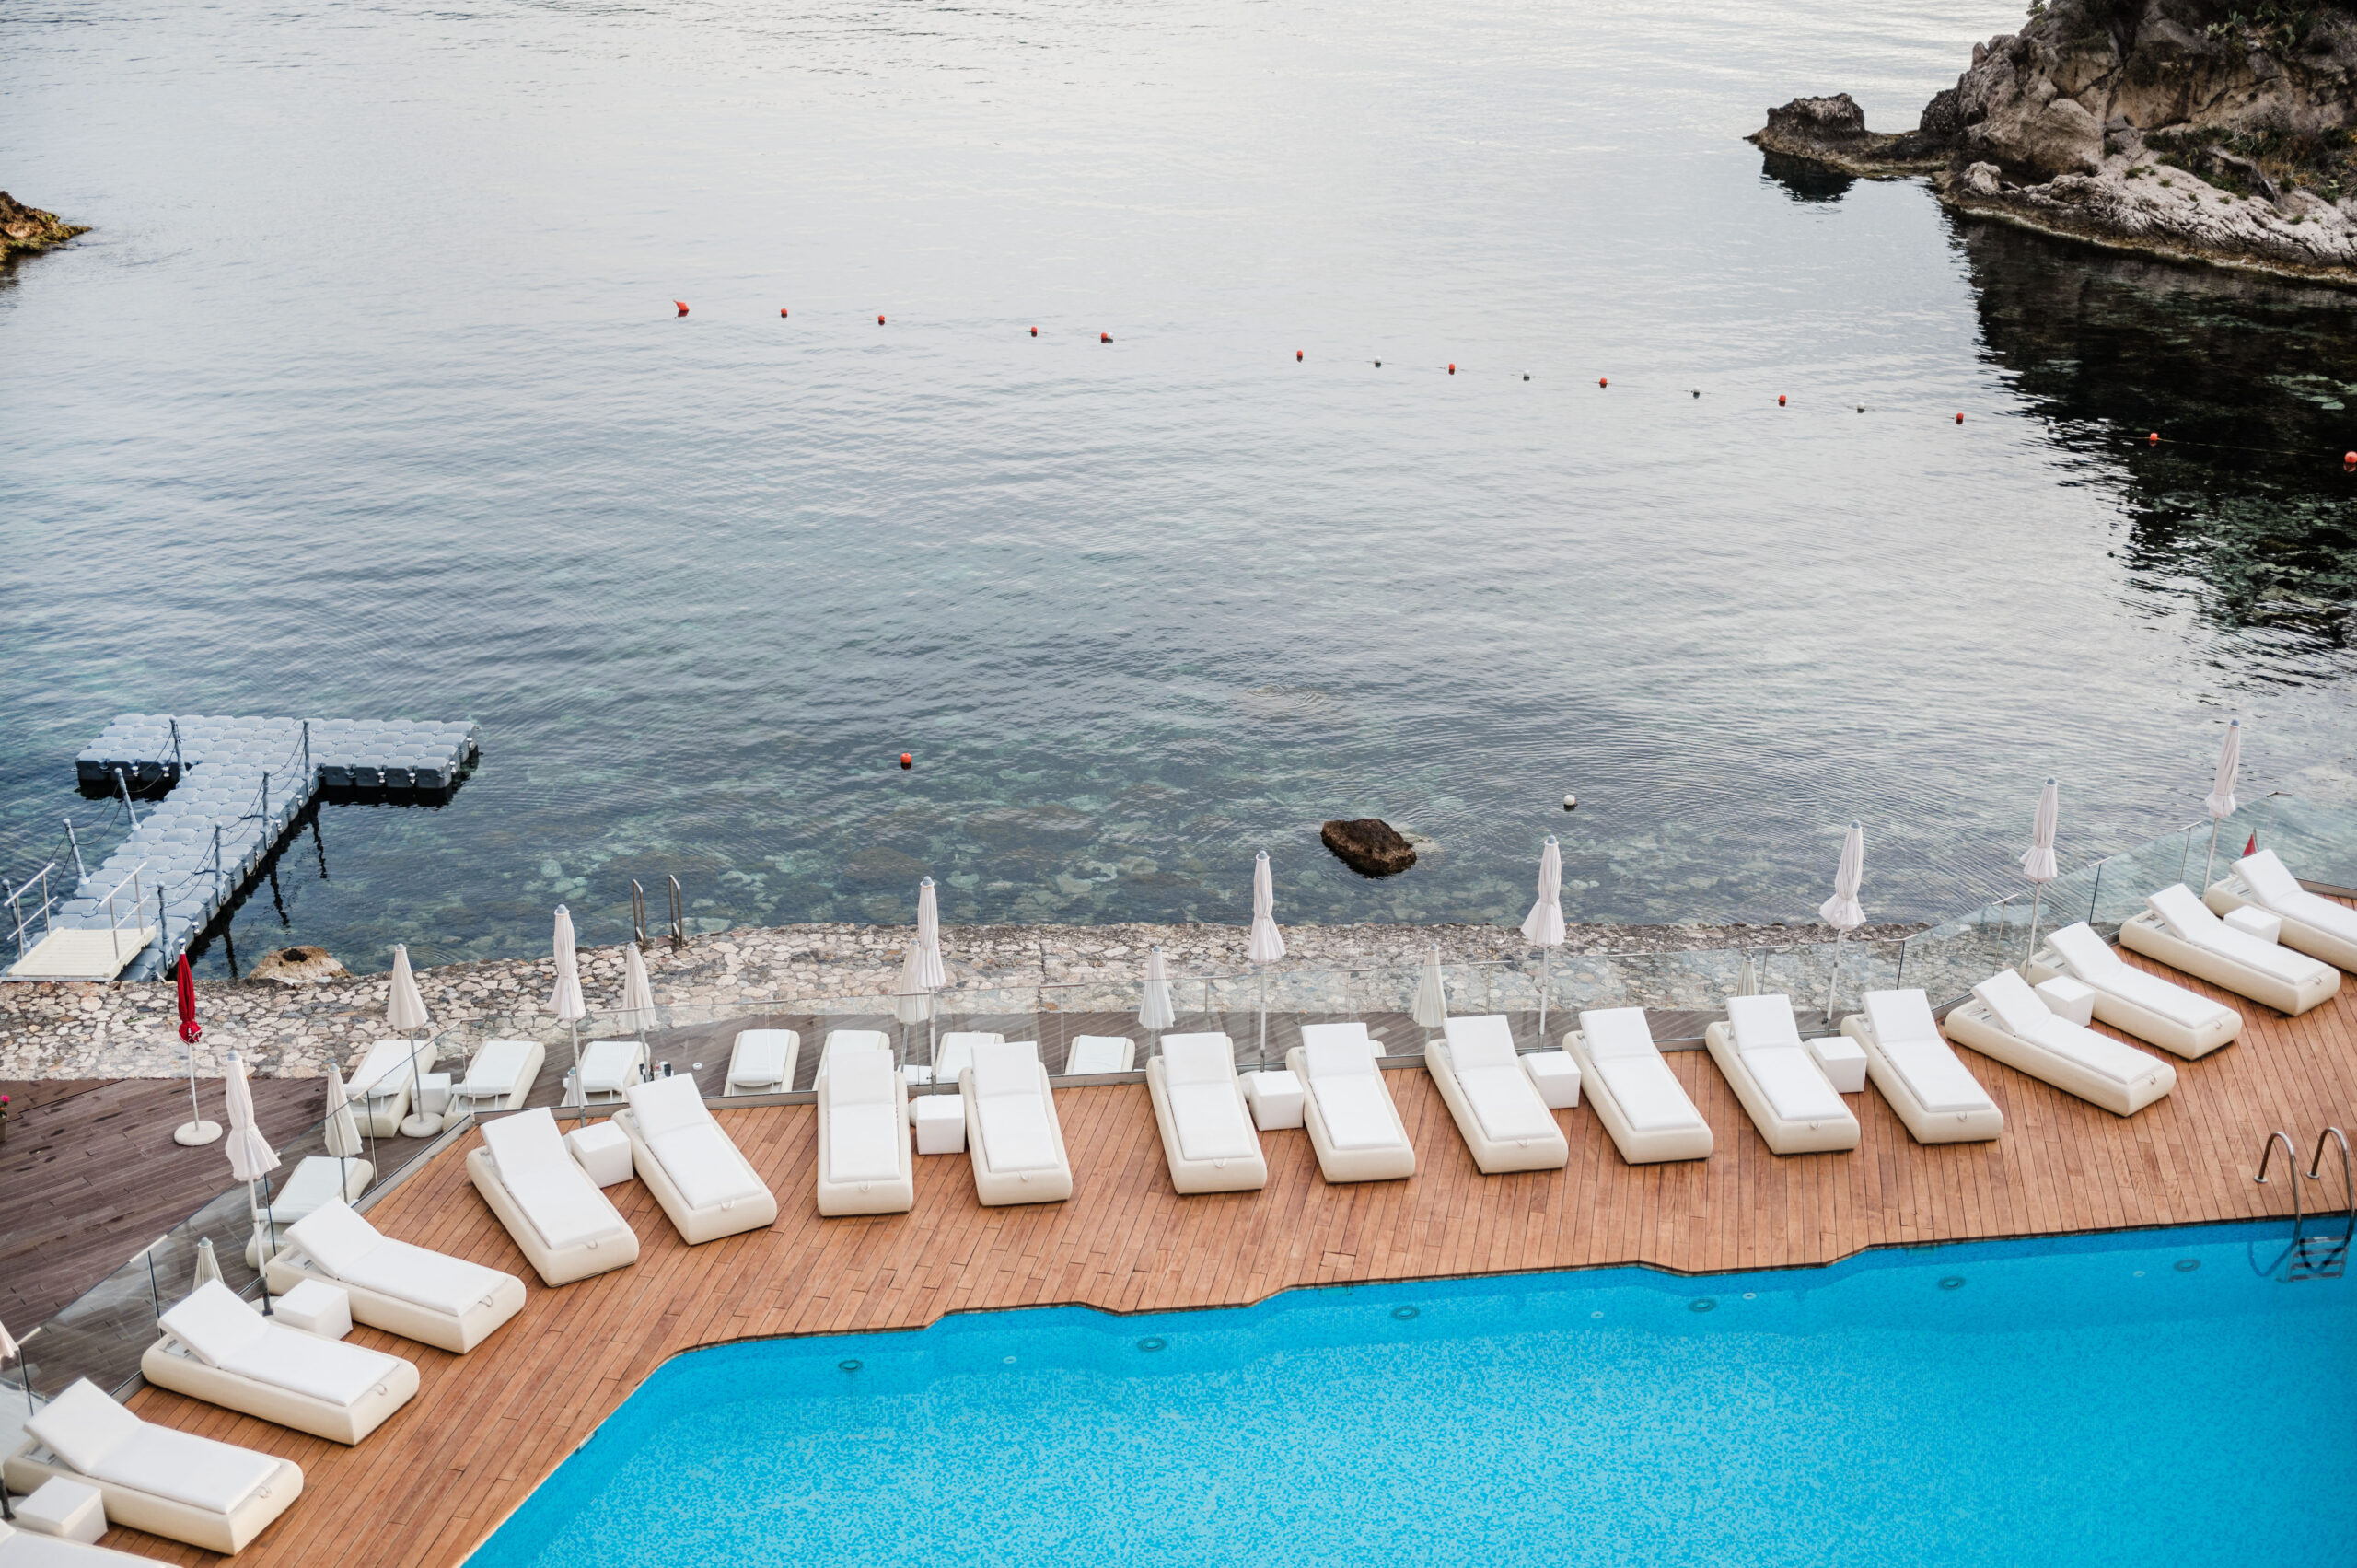 pool and sea view from the balcony at atlantis bay in taormina, sicily